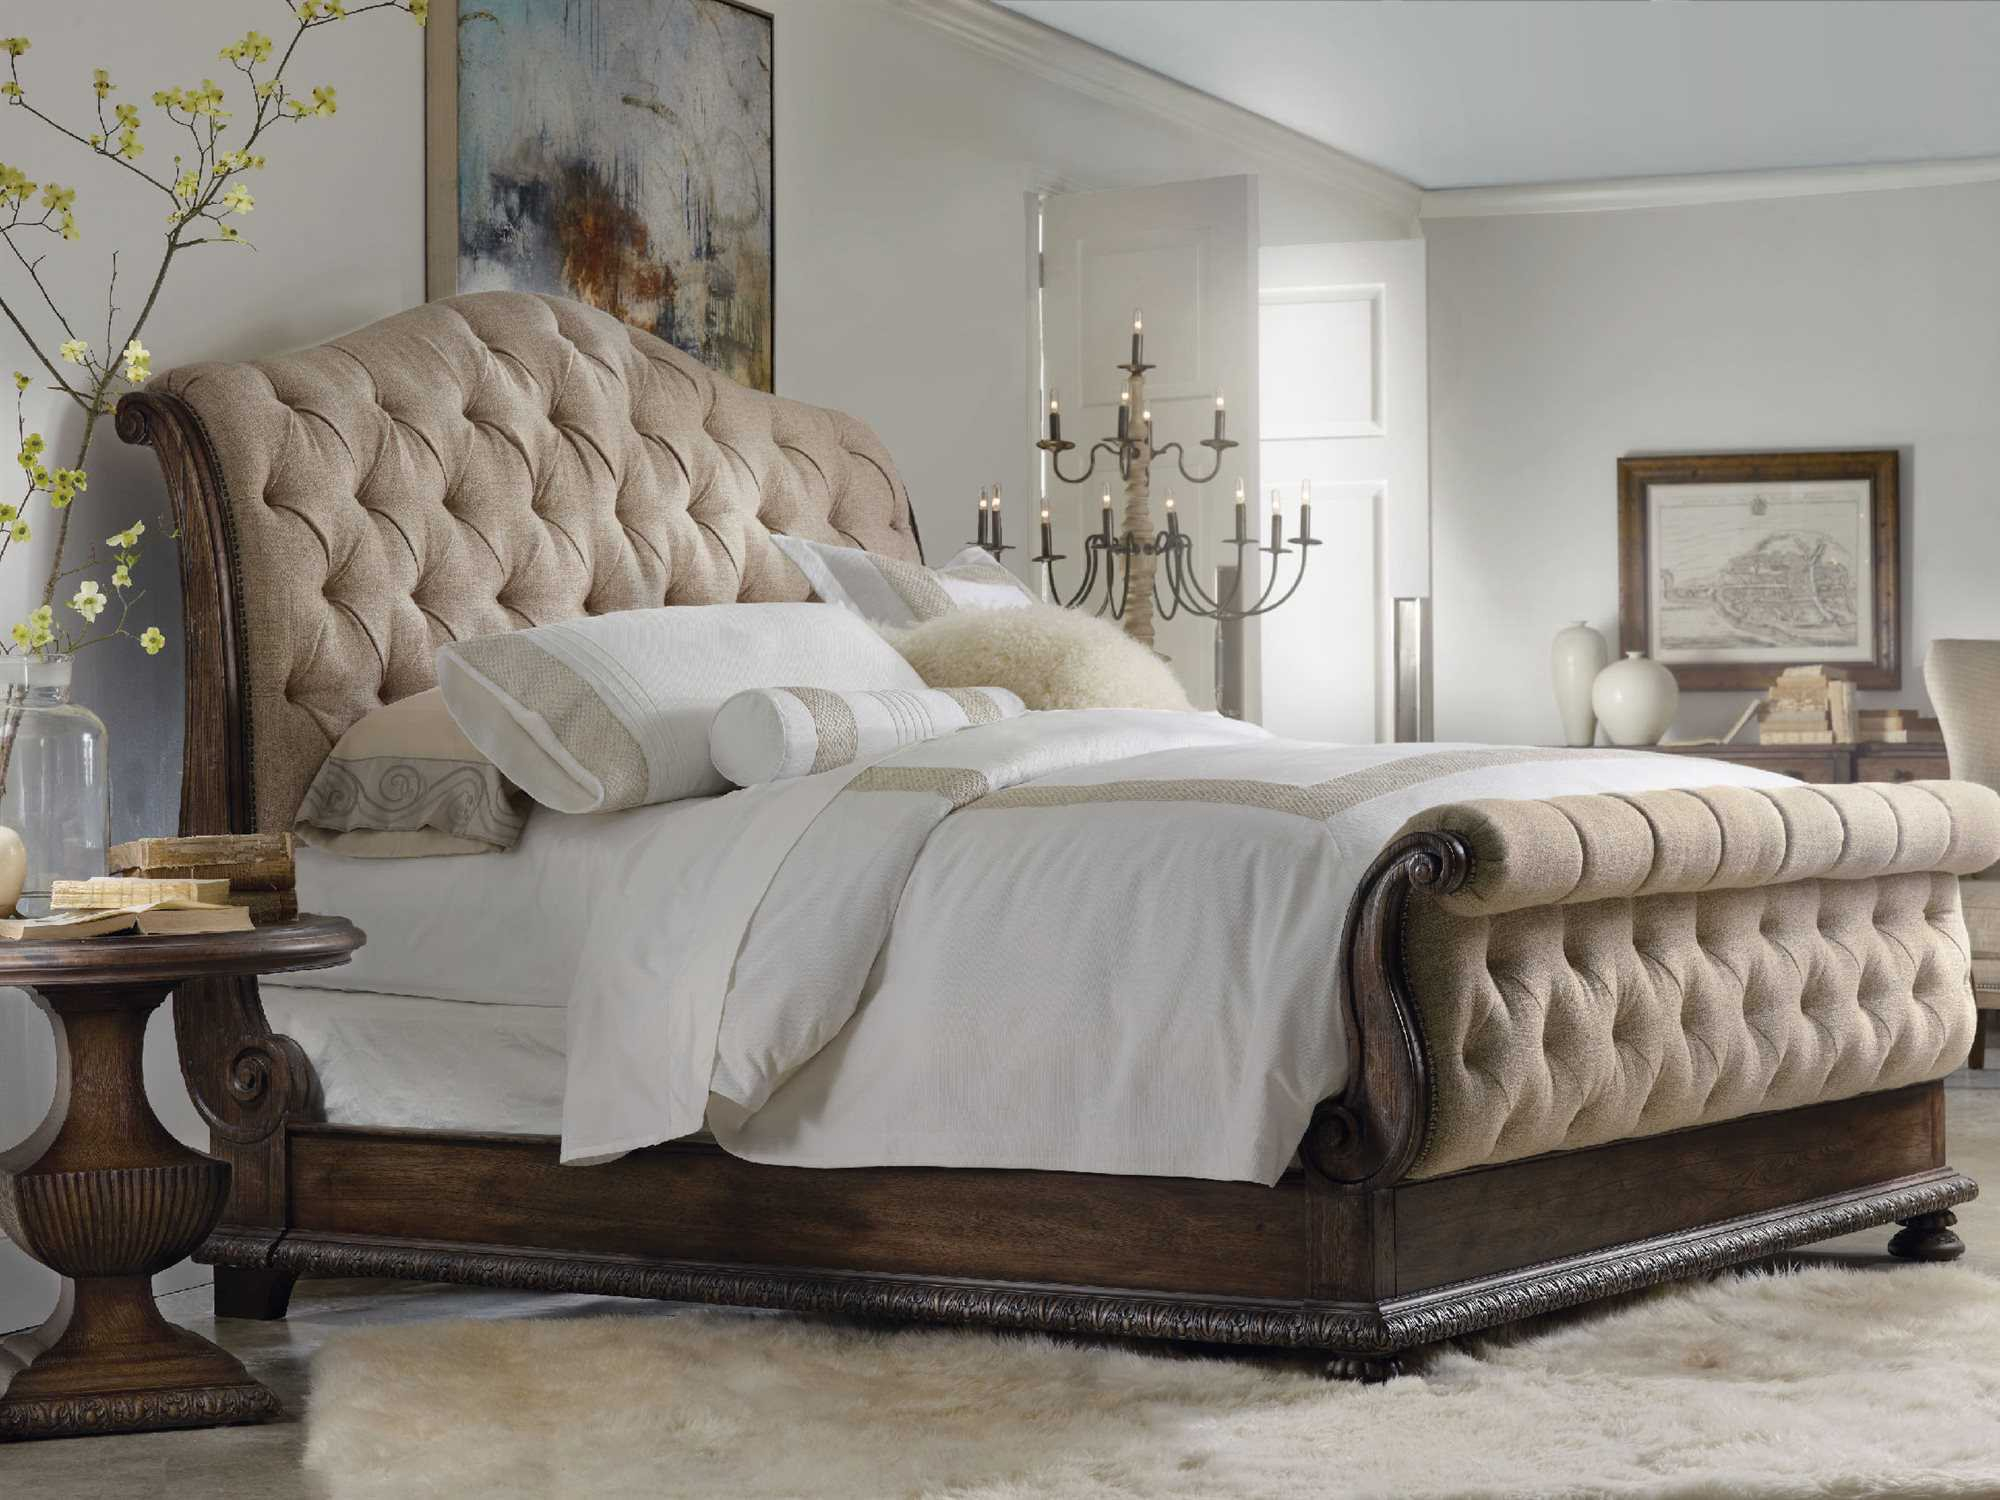 Hooker Furniture Rhapsody Upholstered Sleigh Bed Bedroom Set intended for size 2000 X 1500